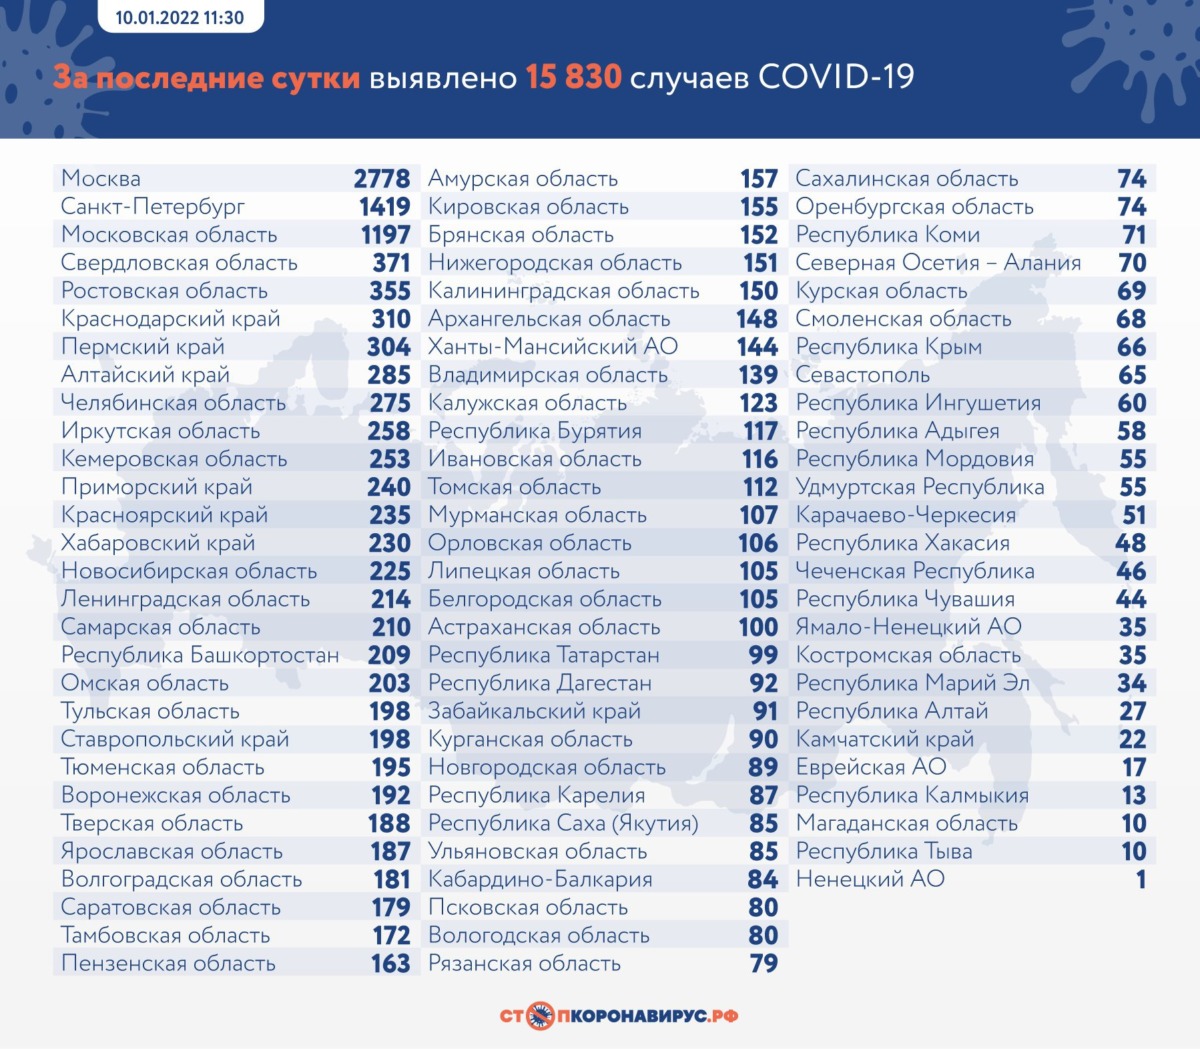 Оперативная статистика по коронавирусу в России на 10 января